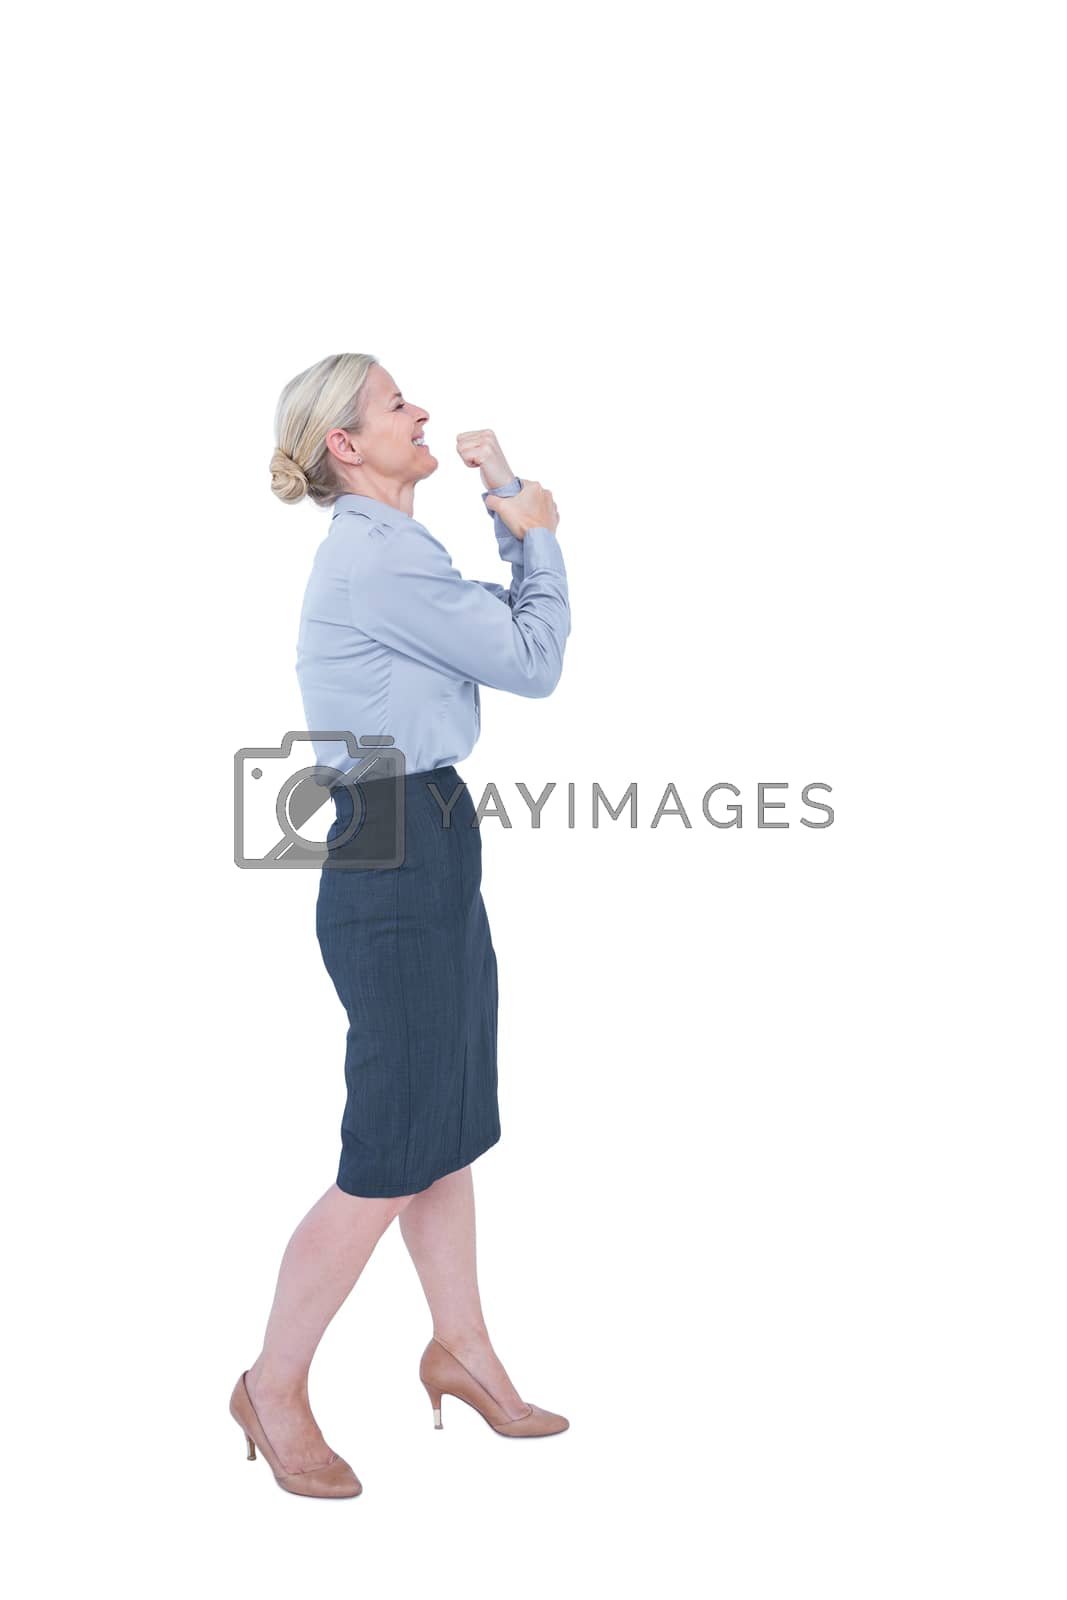 Royalty free image of Businesswoman gesturing by Wavebreakmedia